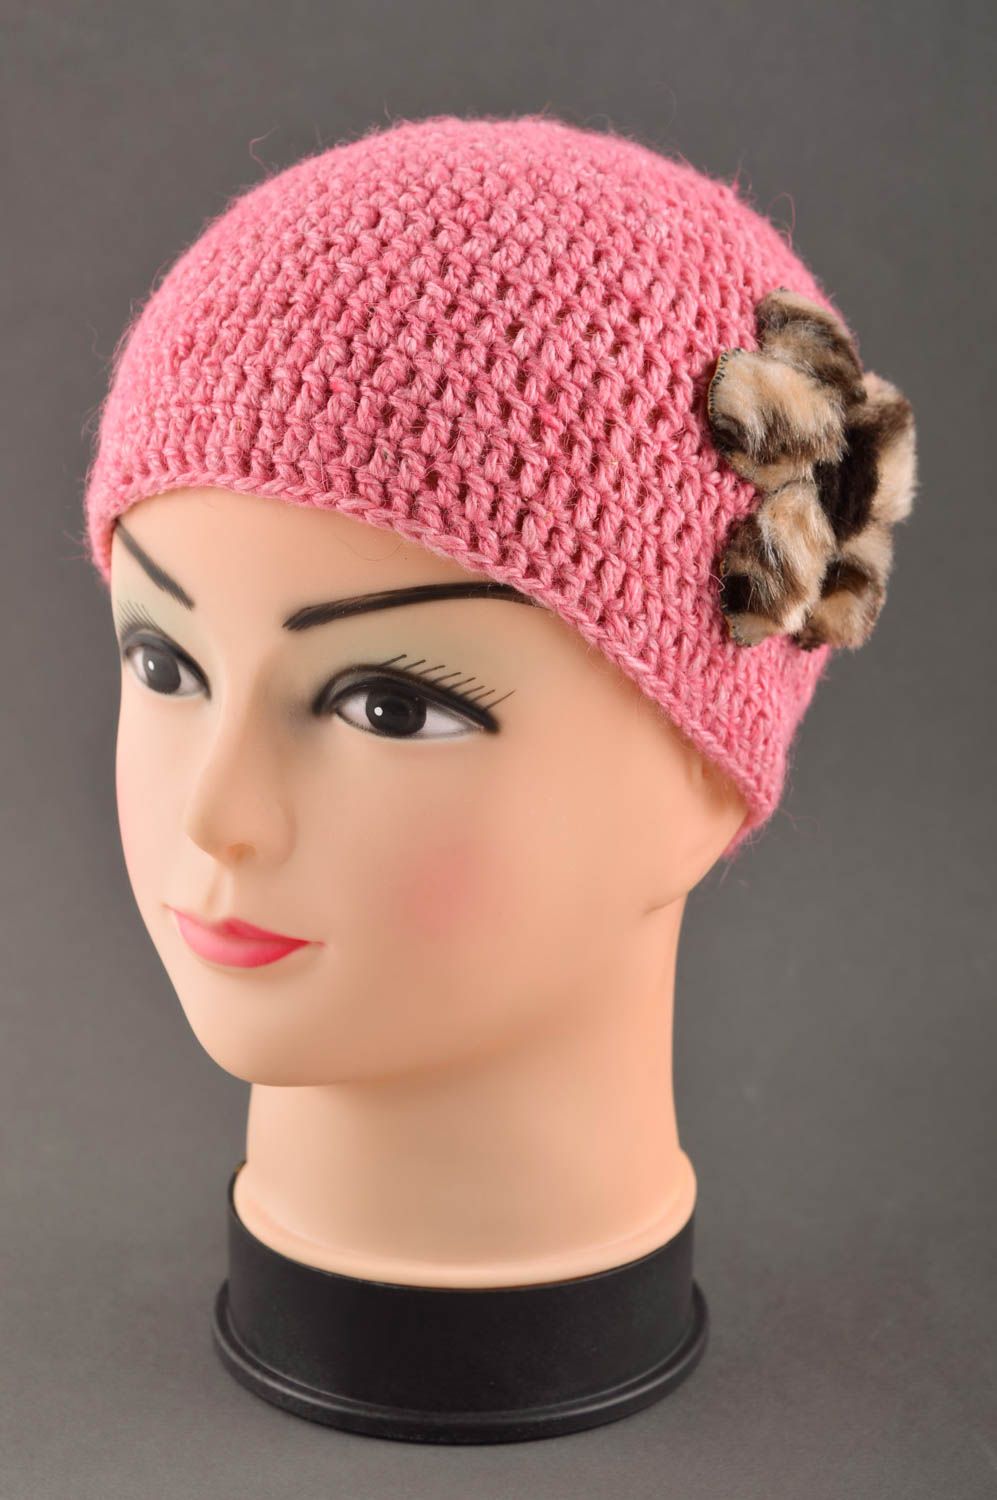 Handmade warm hat designer hat for baby unusual funny hat crocheted hat photo 1